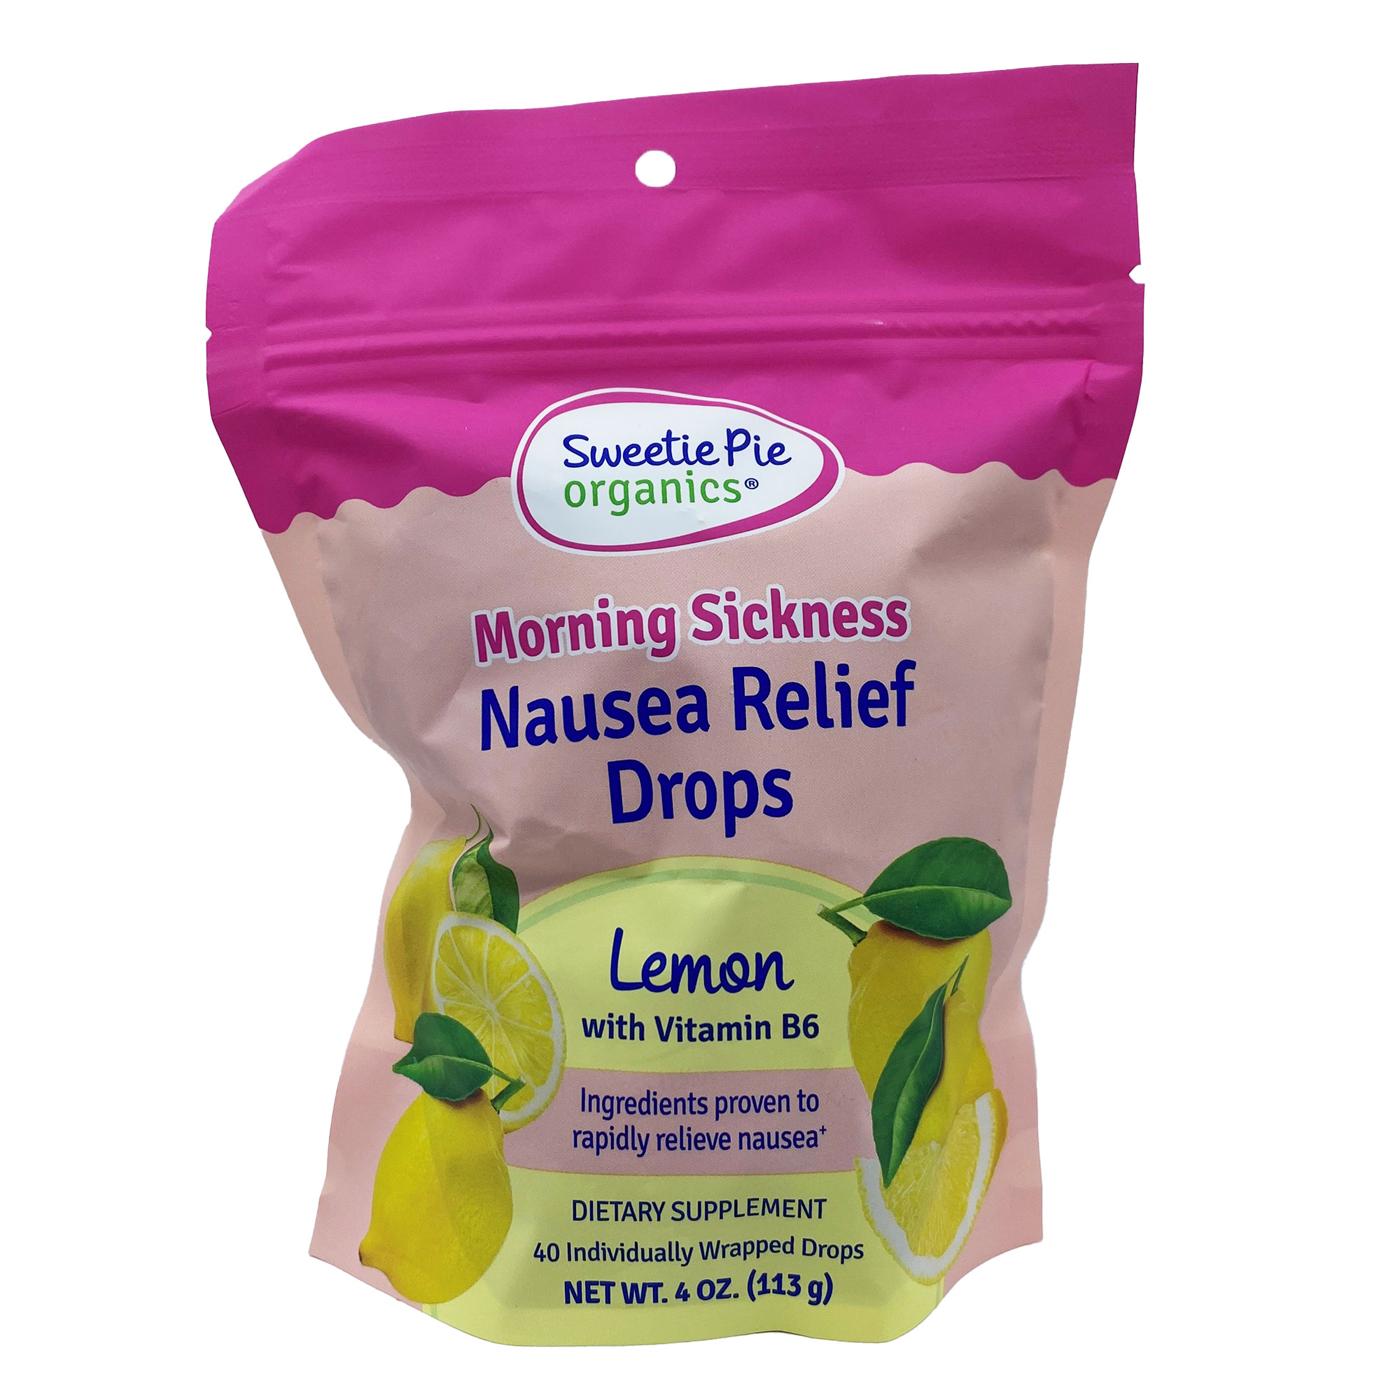 Sweetie Pie Organics Morning Sickness Nausea Relief Drops - Lemon; image 1 of 2